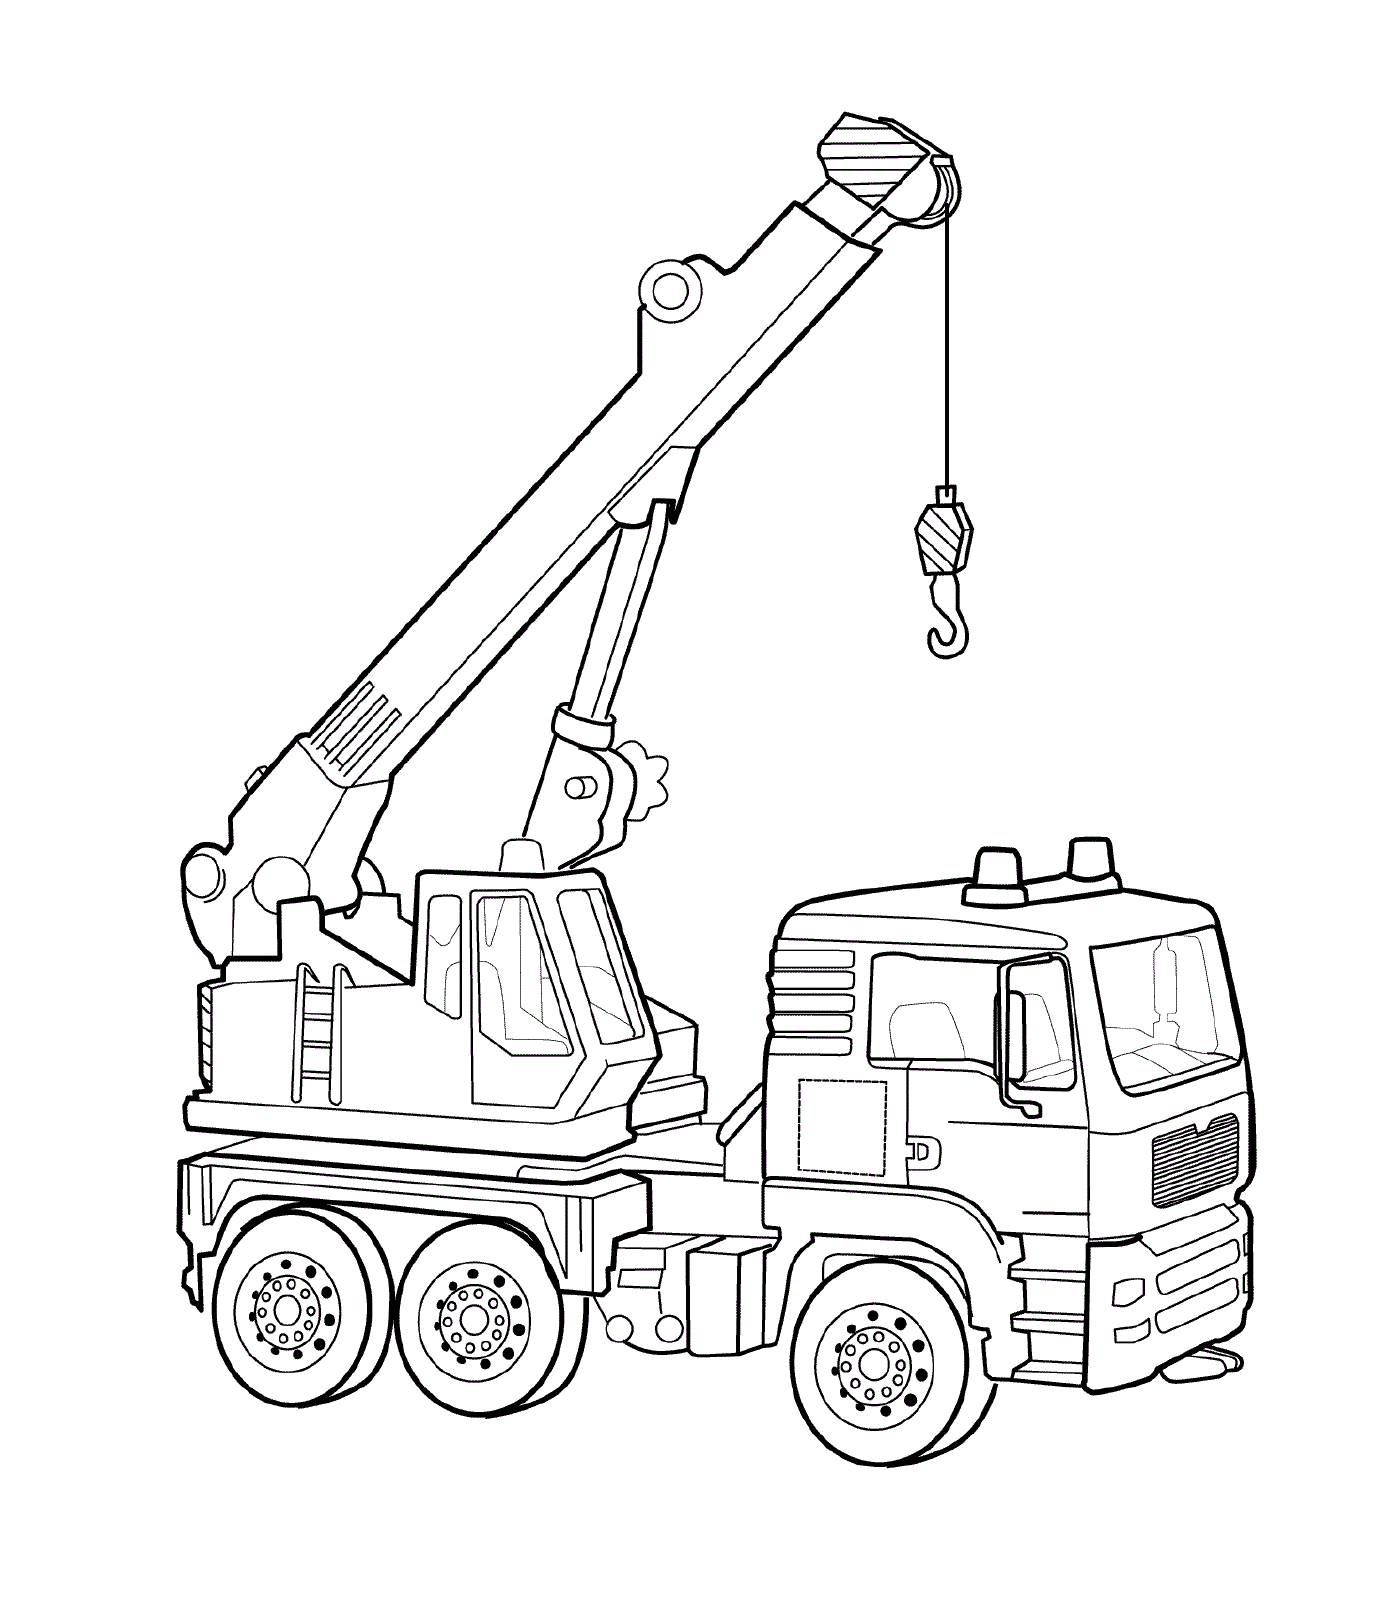  Construction crane truck 